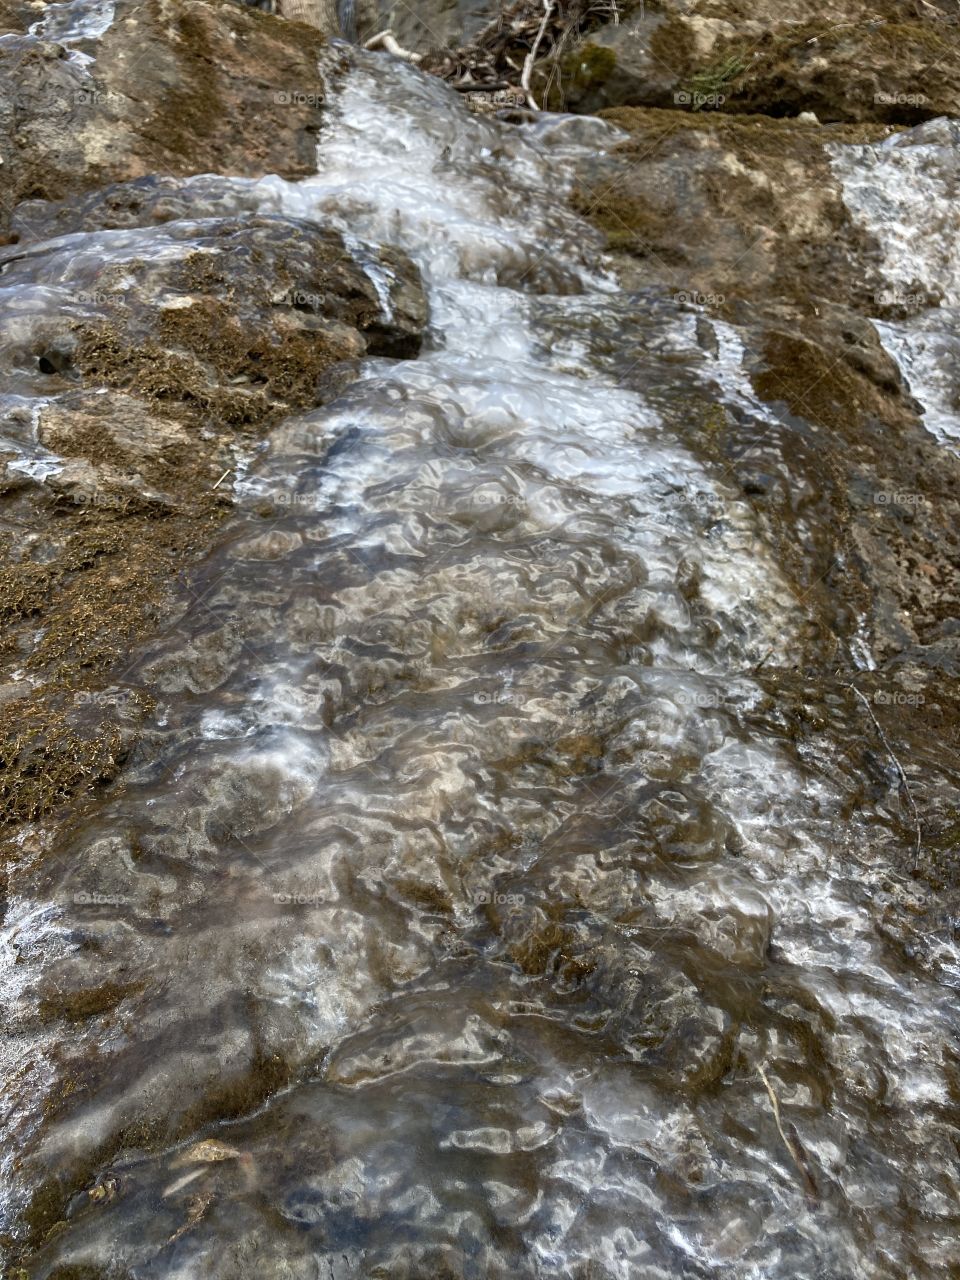 Frozen water falling down a rock face